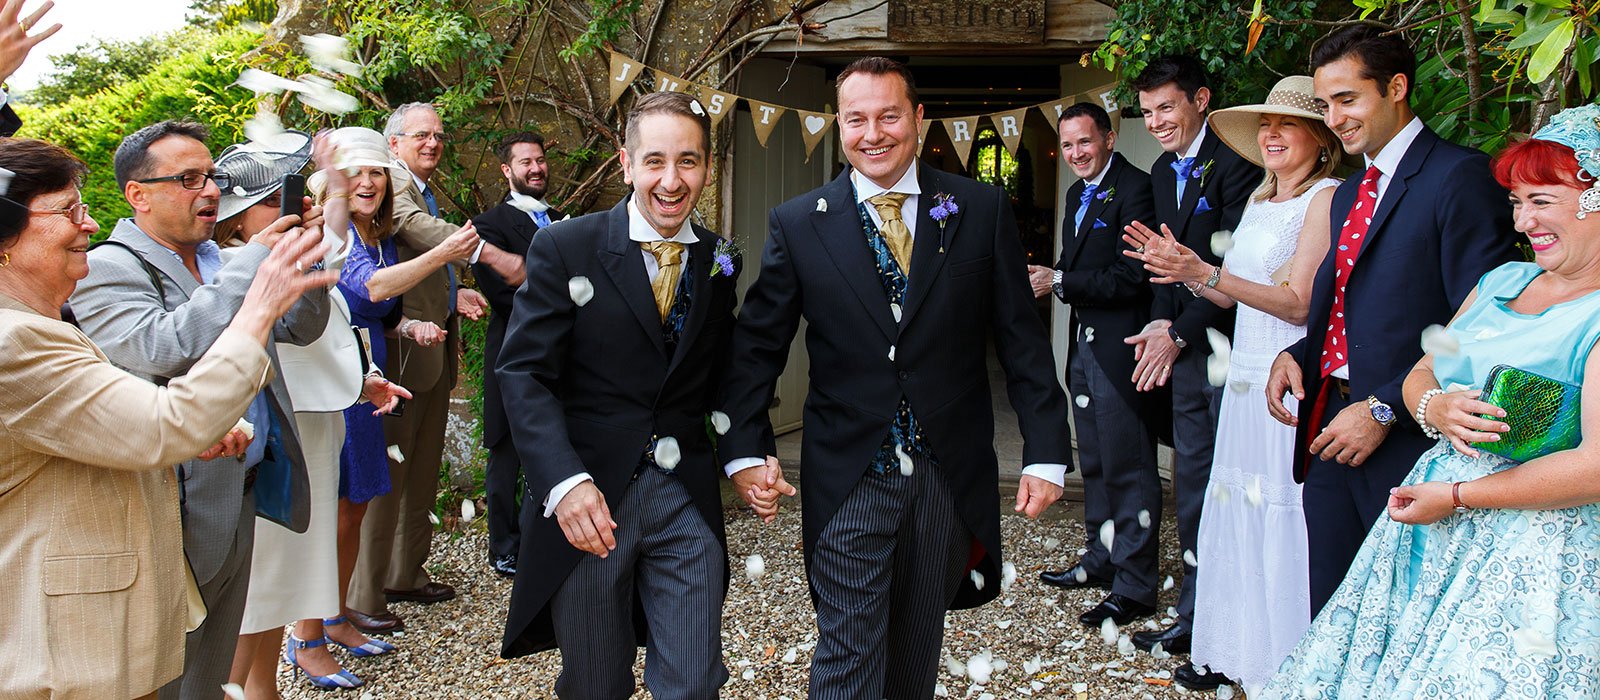 You are currently viewing Brympton wedding | Jason & John | sneak peek